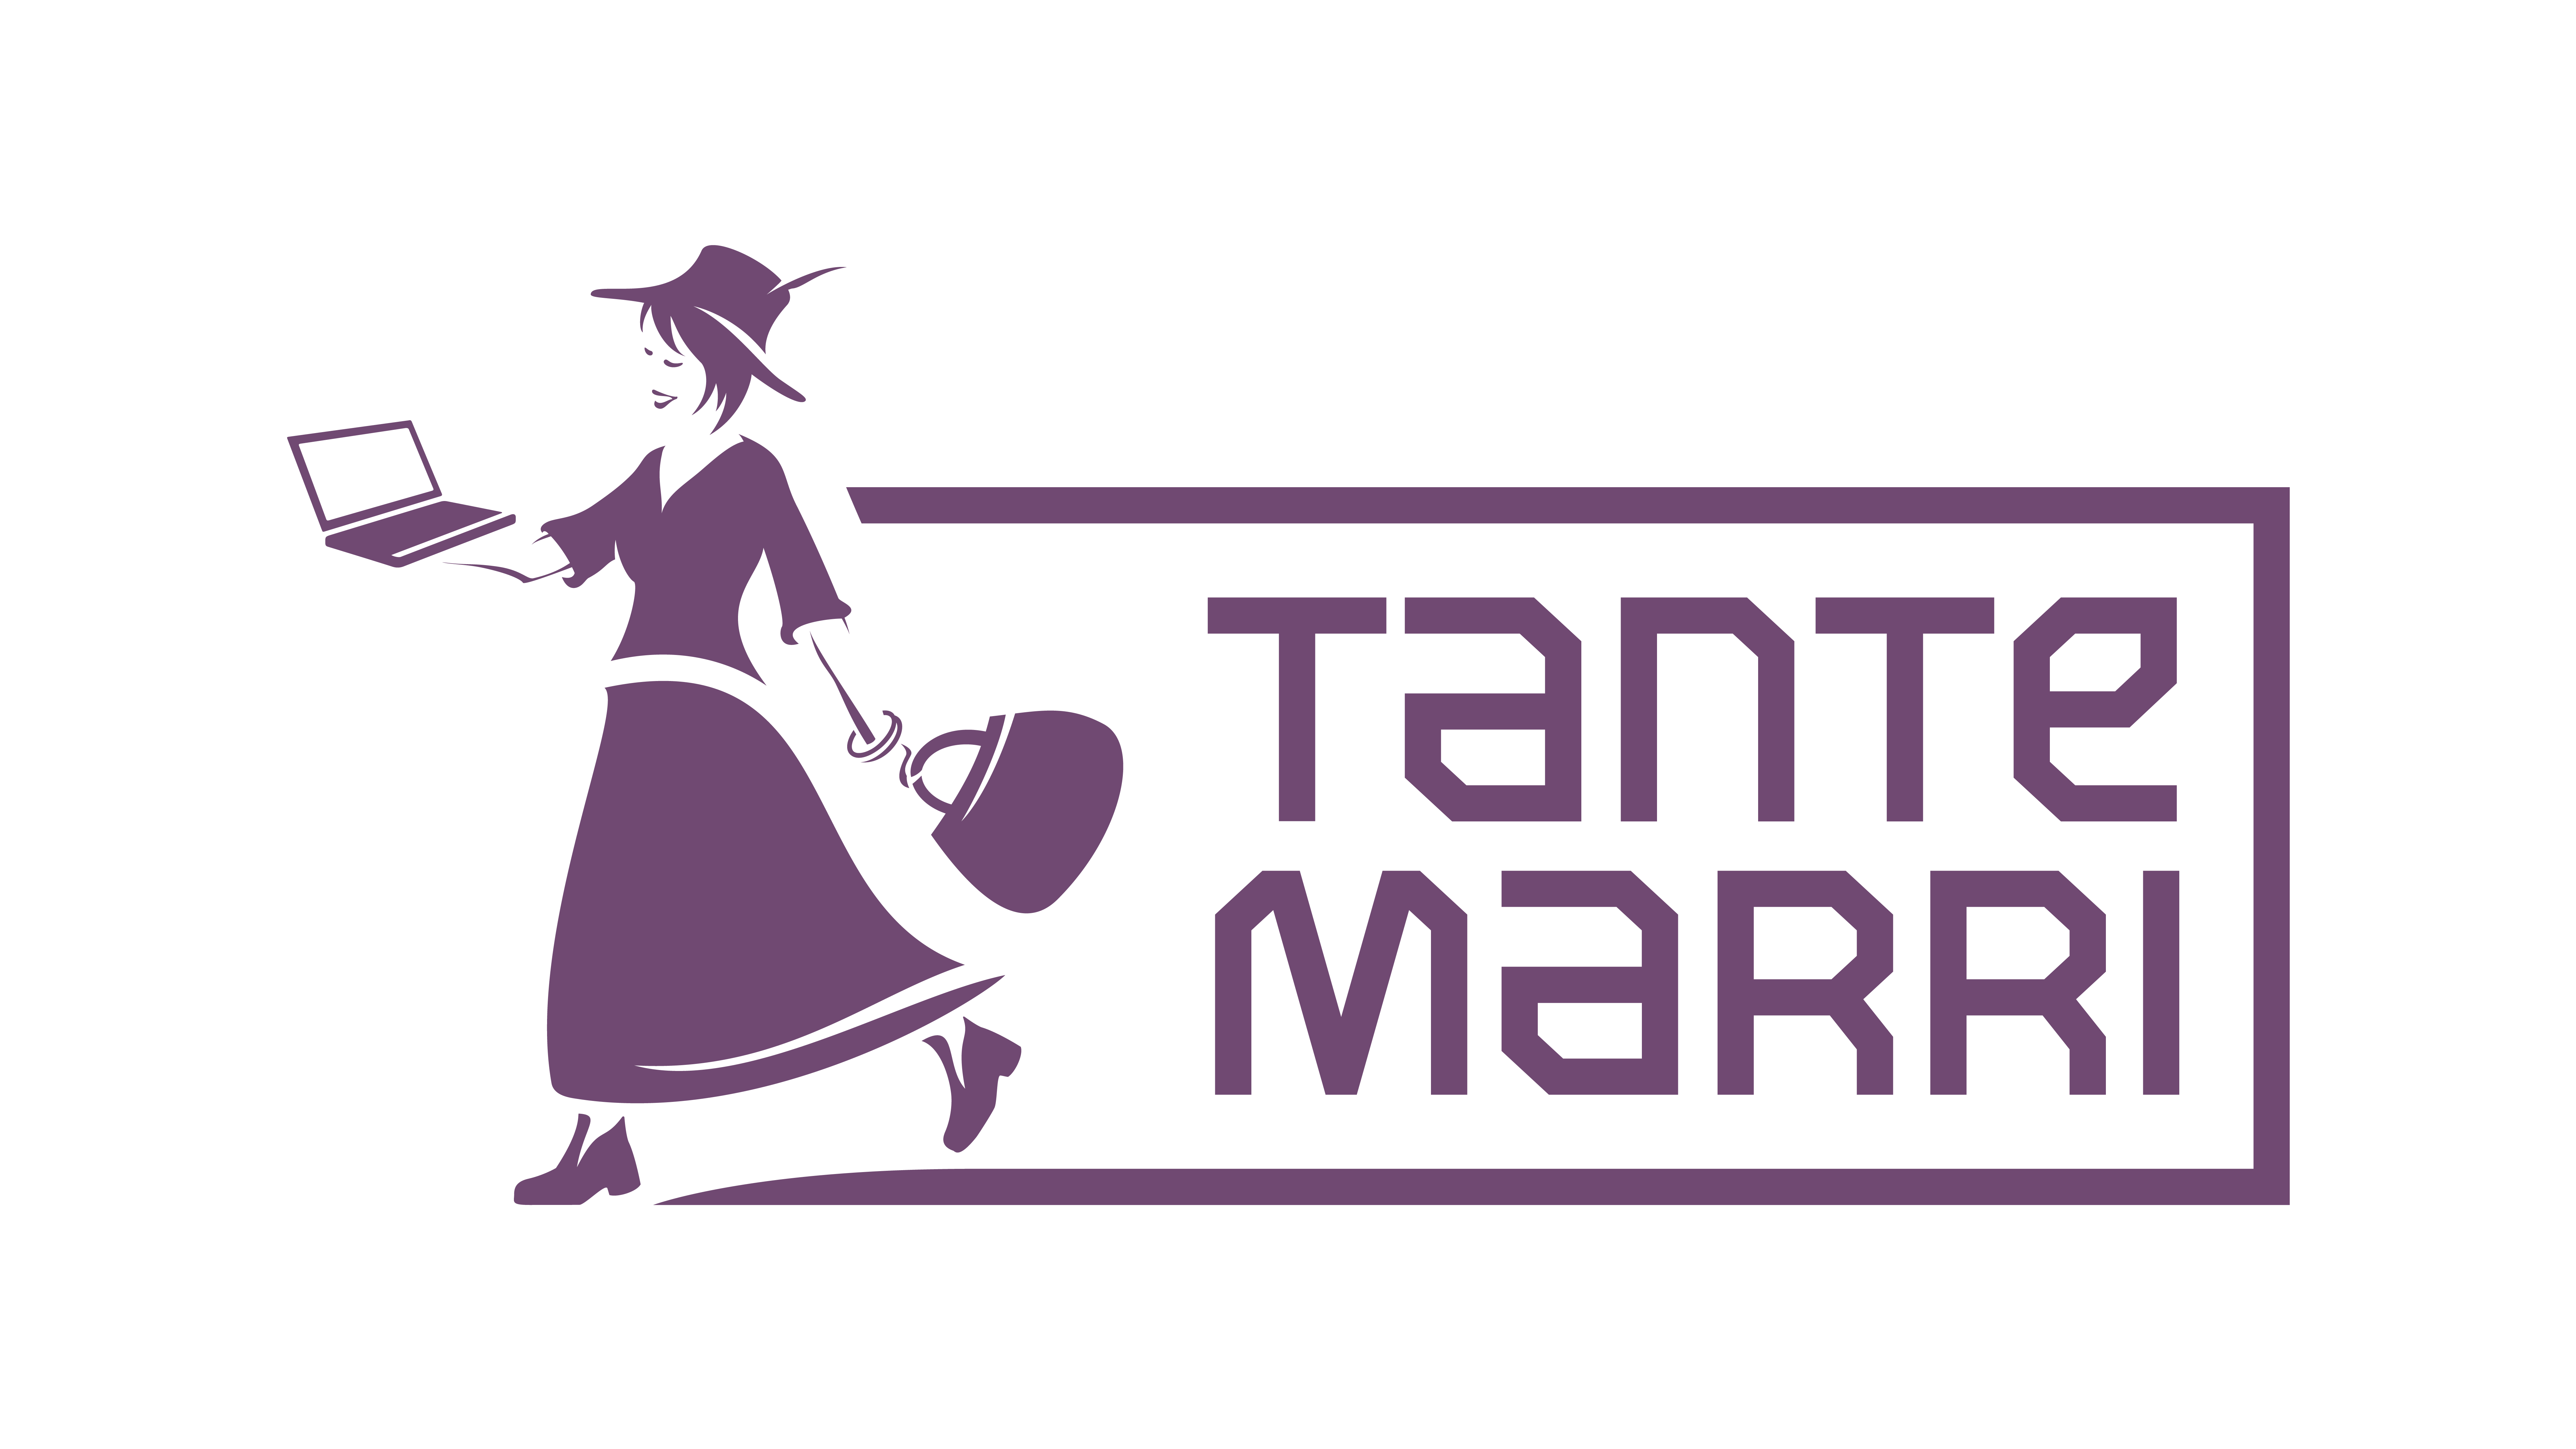 tante-marri-bringts-logo-weiss